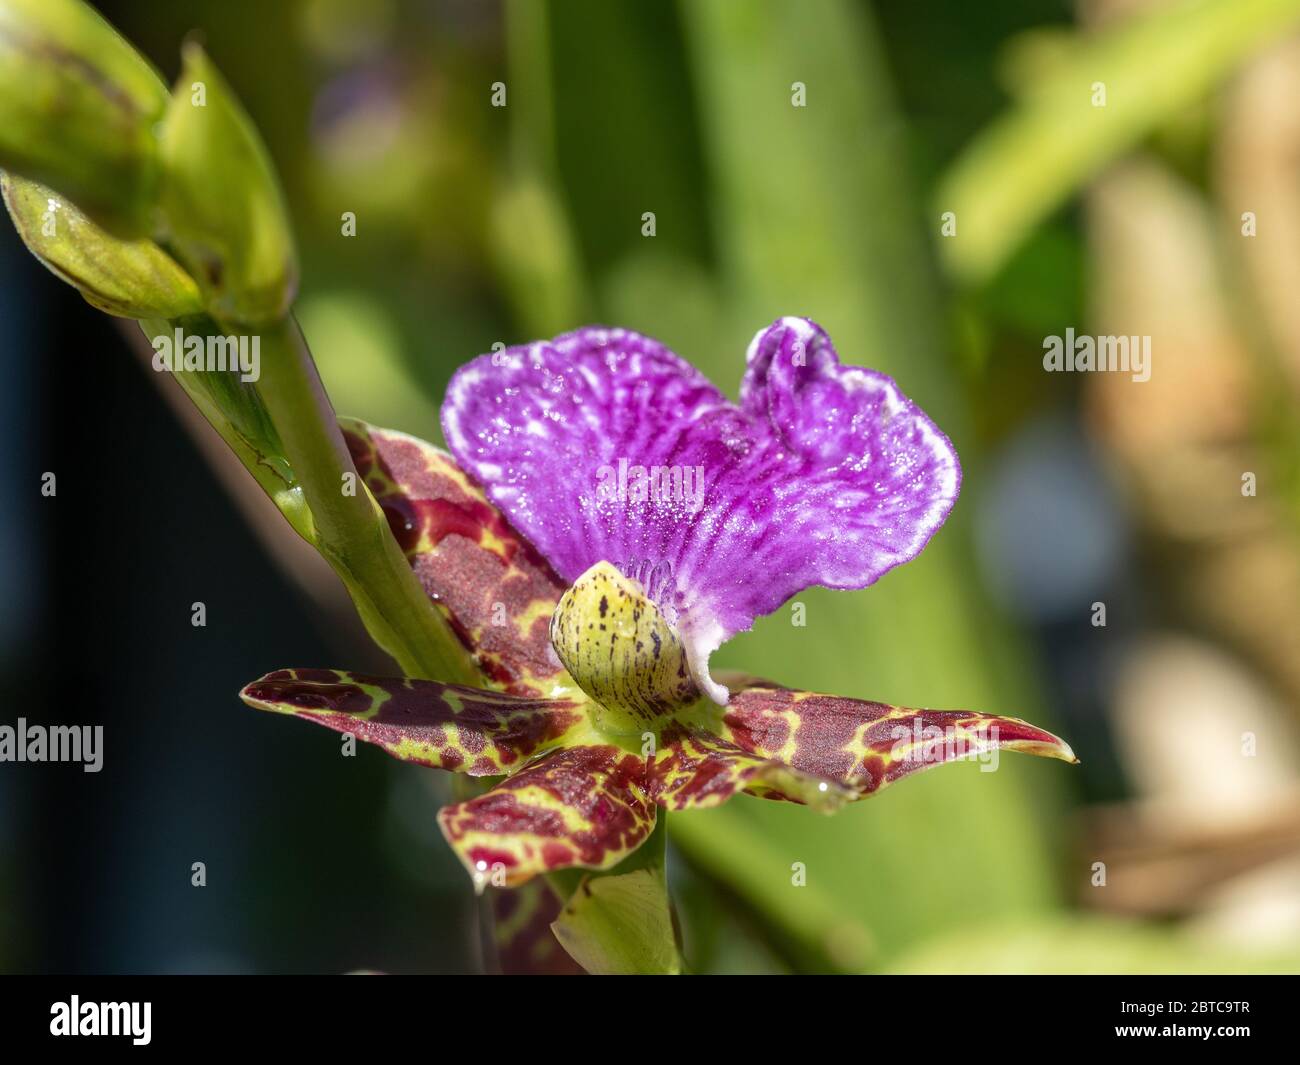 Giraffe like speckles of the purple Zygopetalum orchid Stock Photo